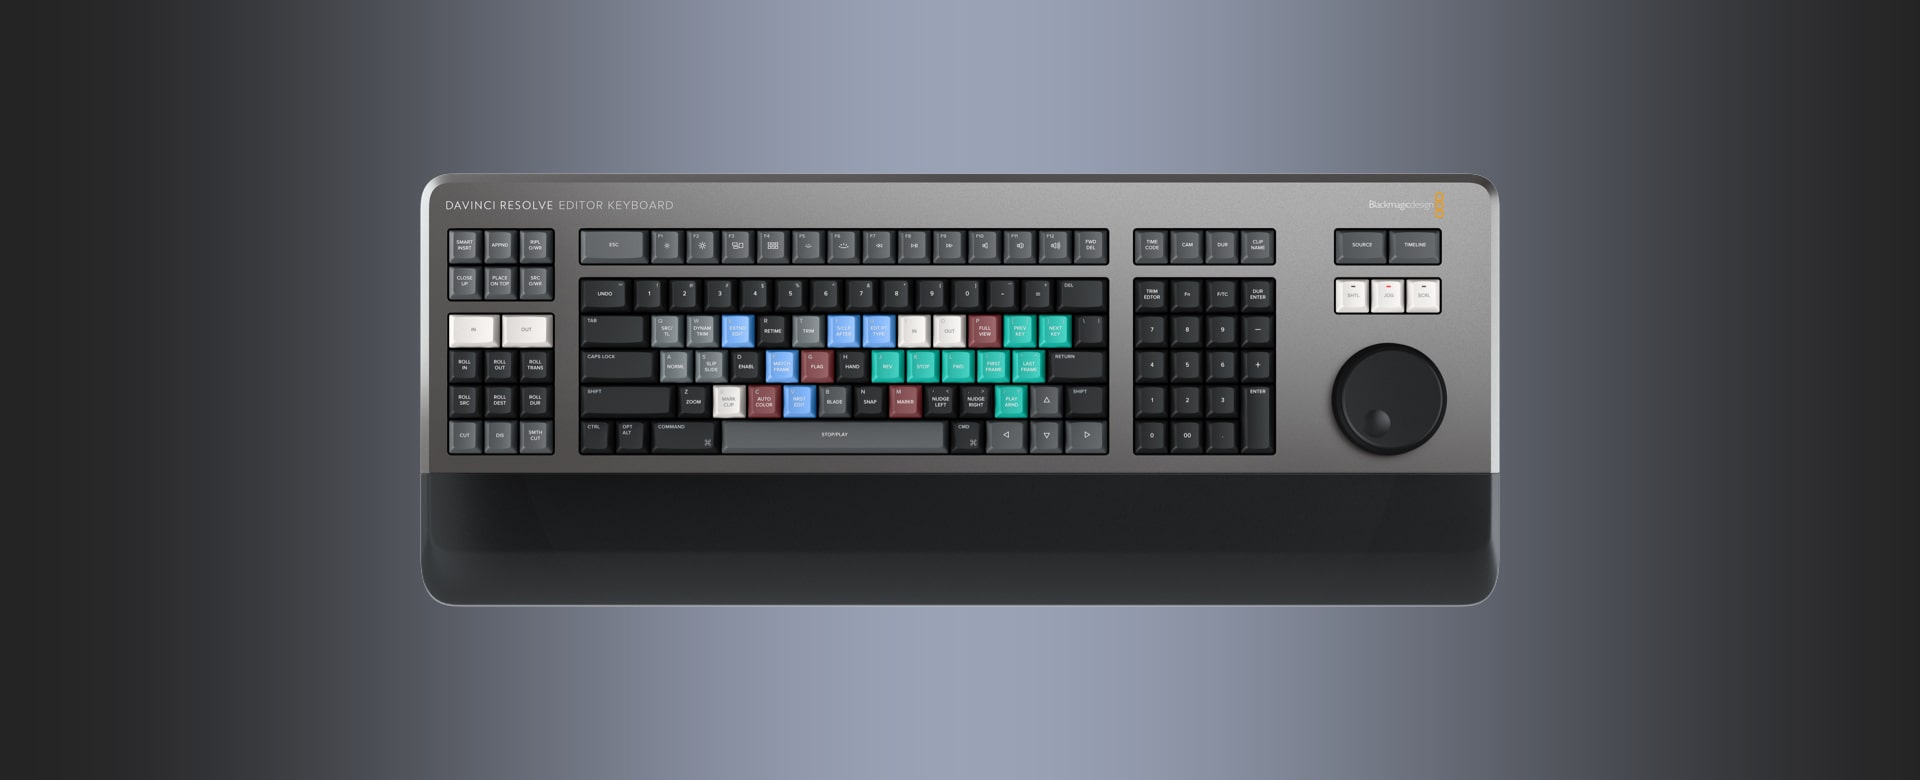 blackmagic design keyboard